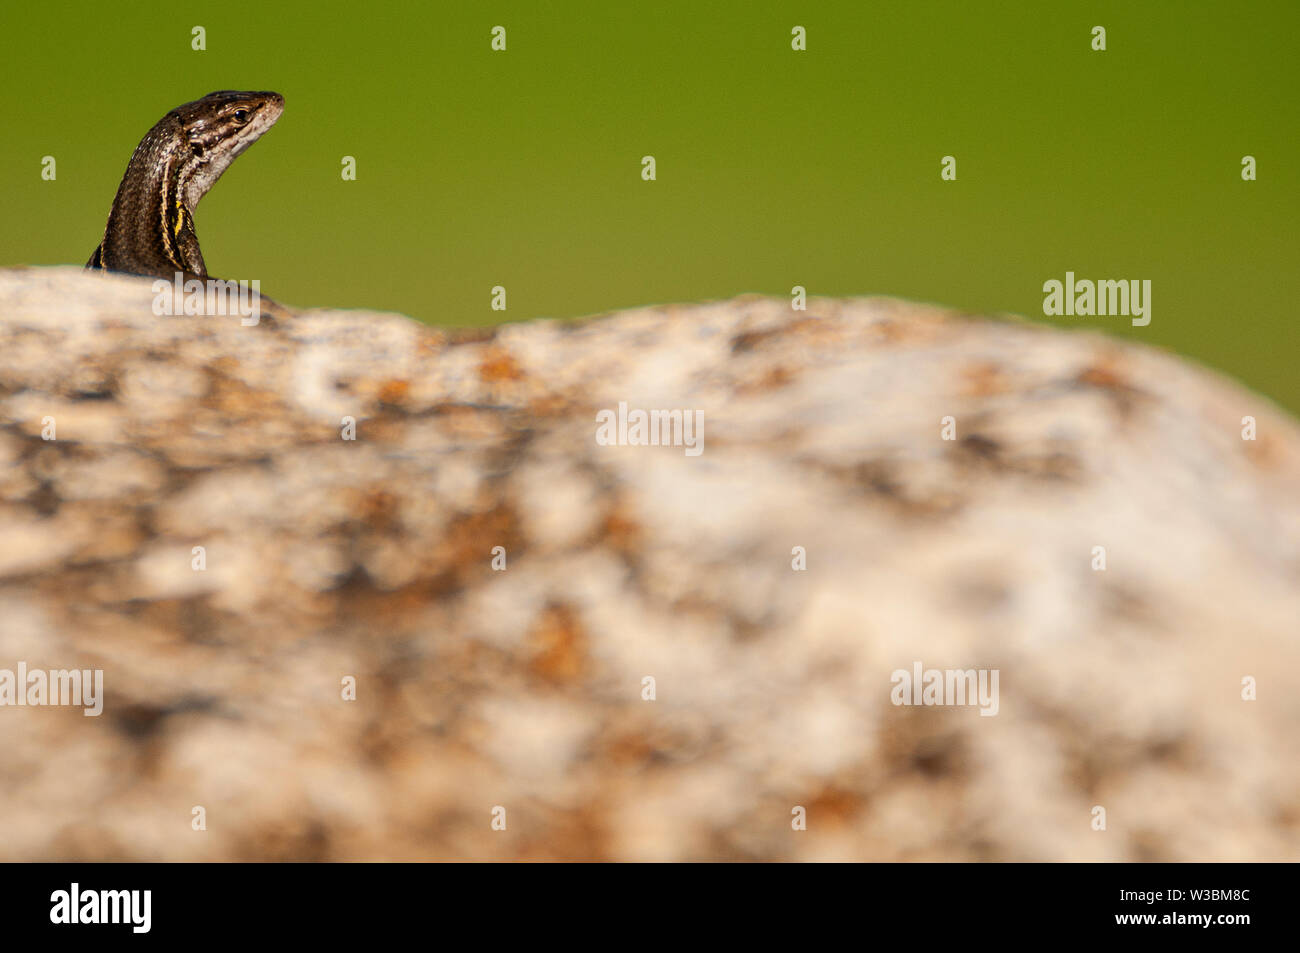 Psammodromus grande - Psammodromus algirus - reptile lizard sunning on a rock Stock Photo